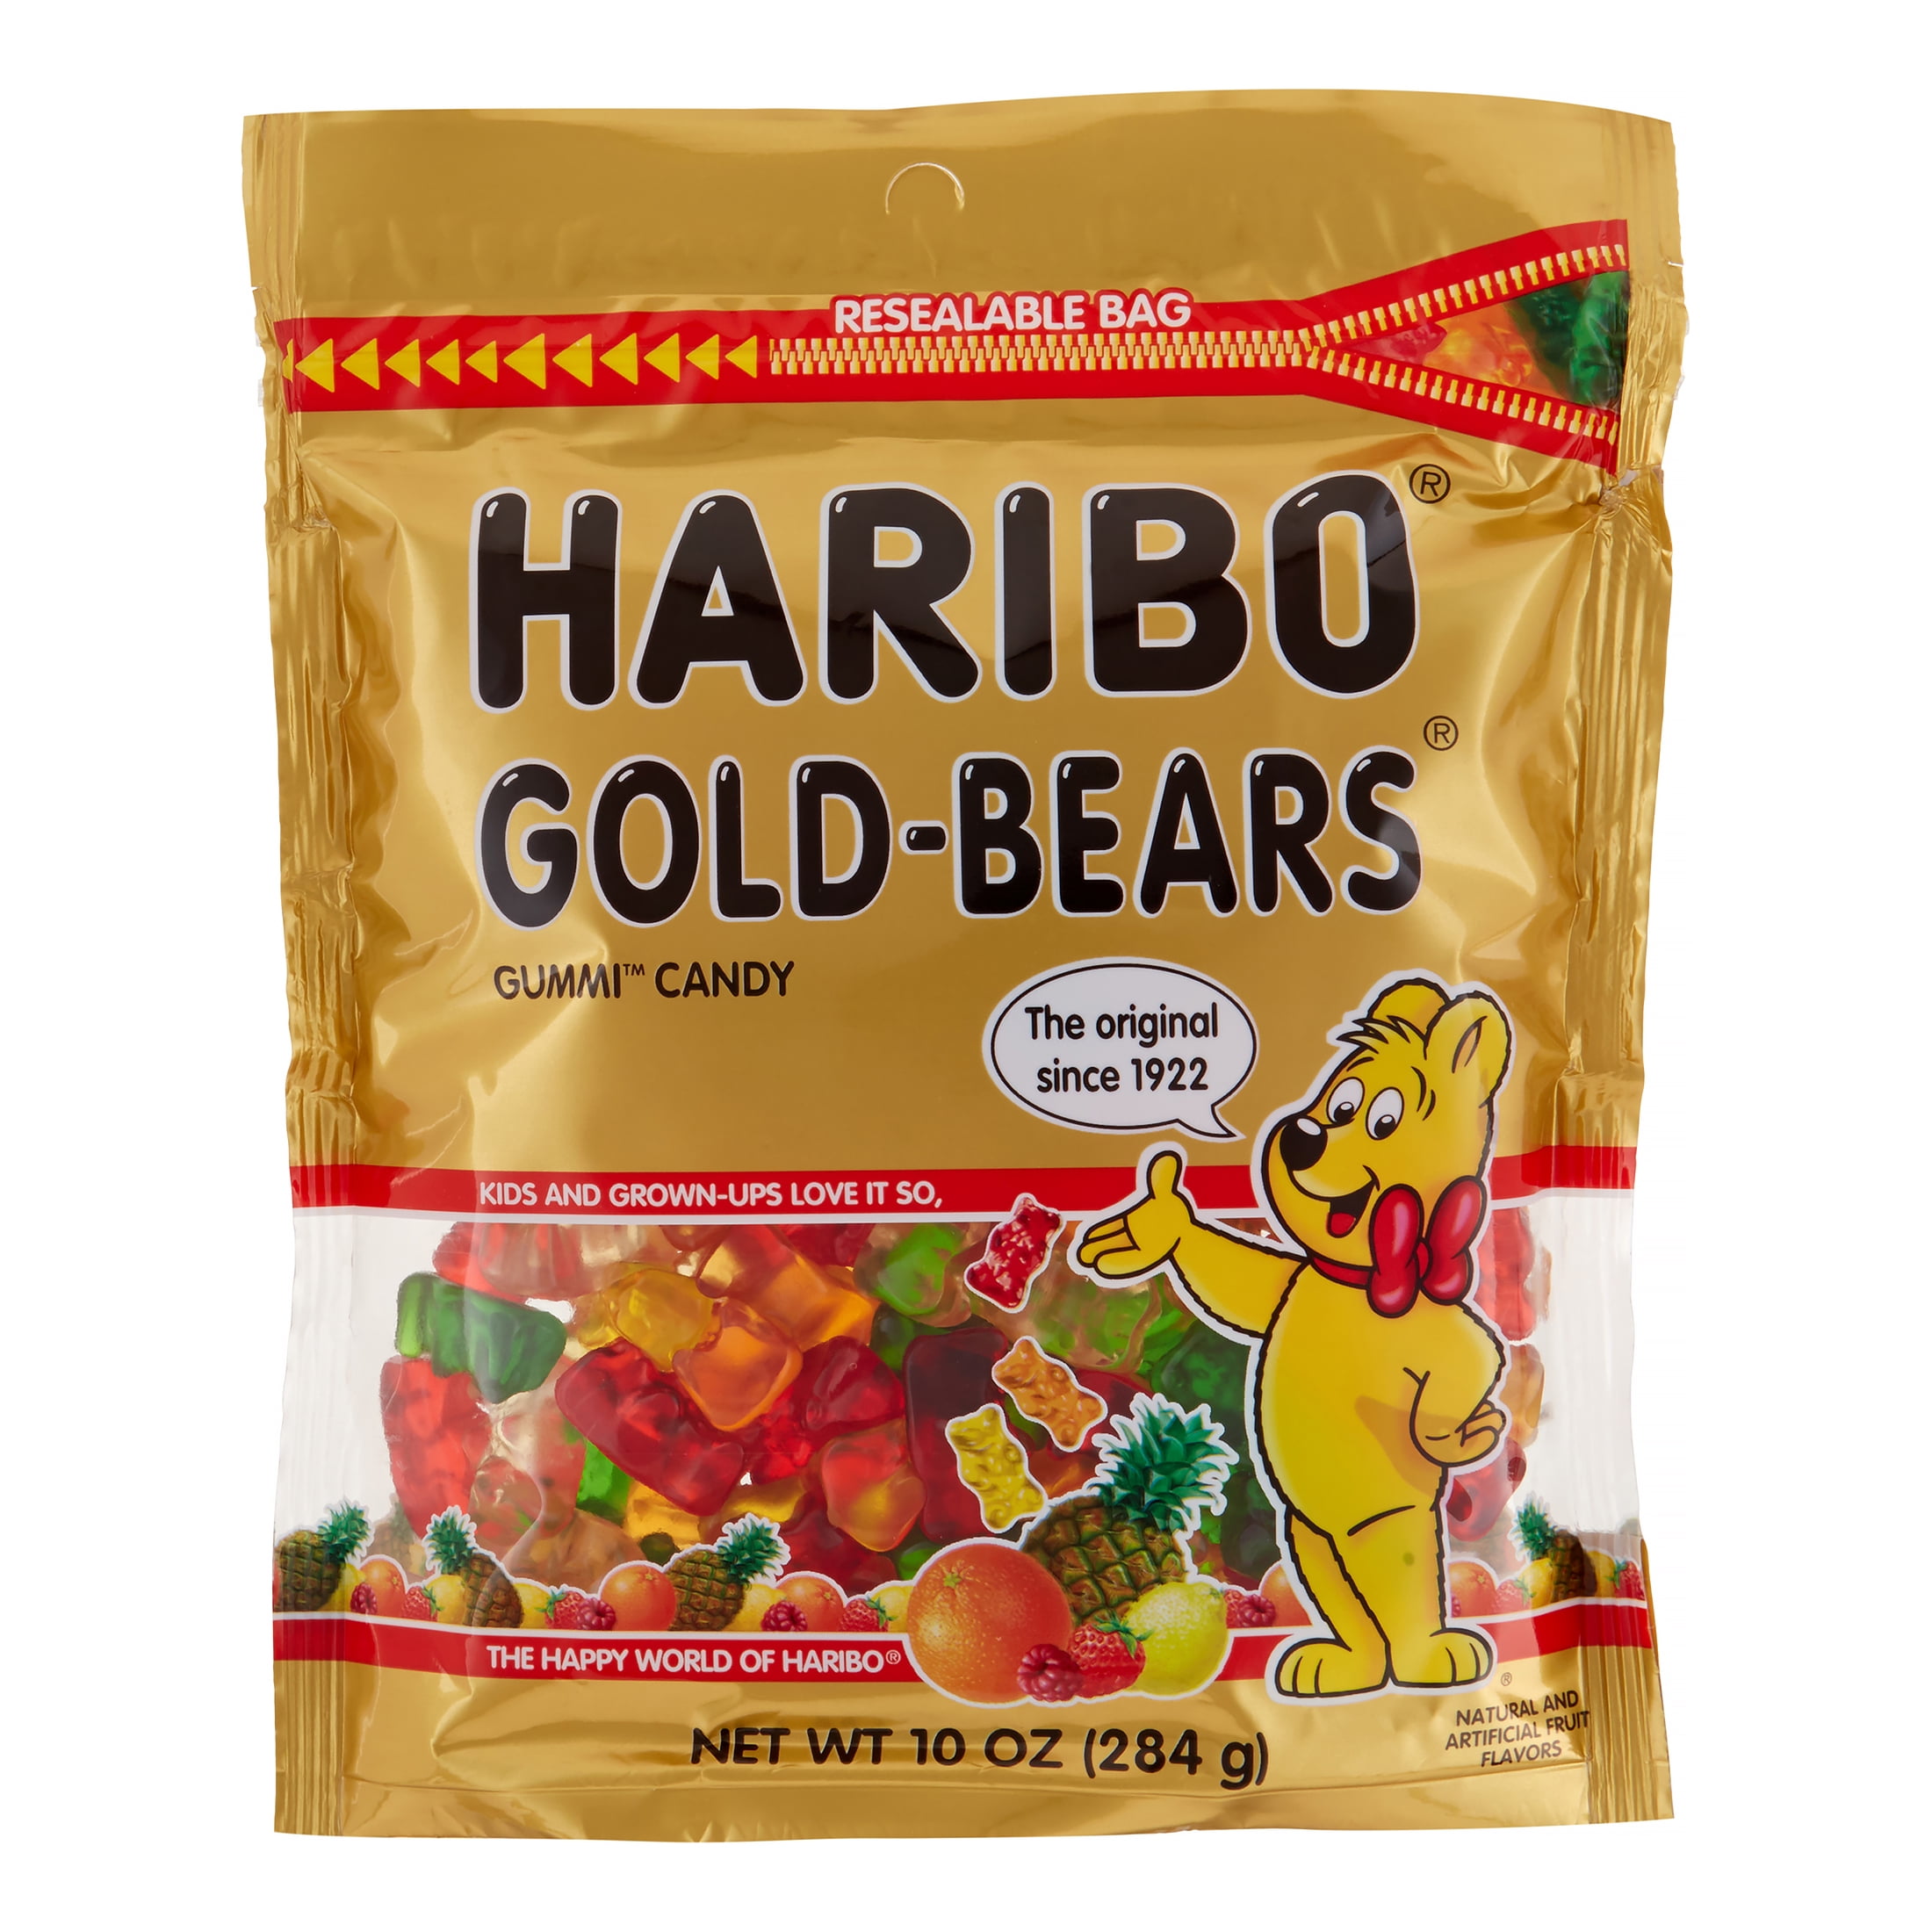 Gummy bears - The original Goldbears since 1922